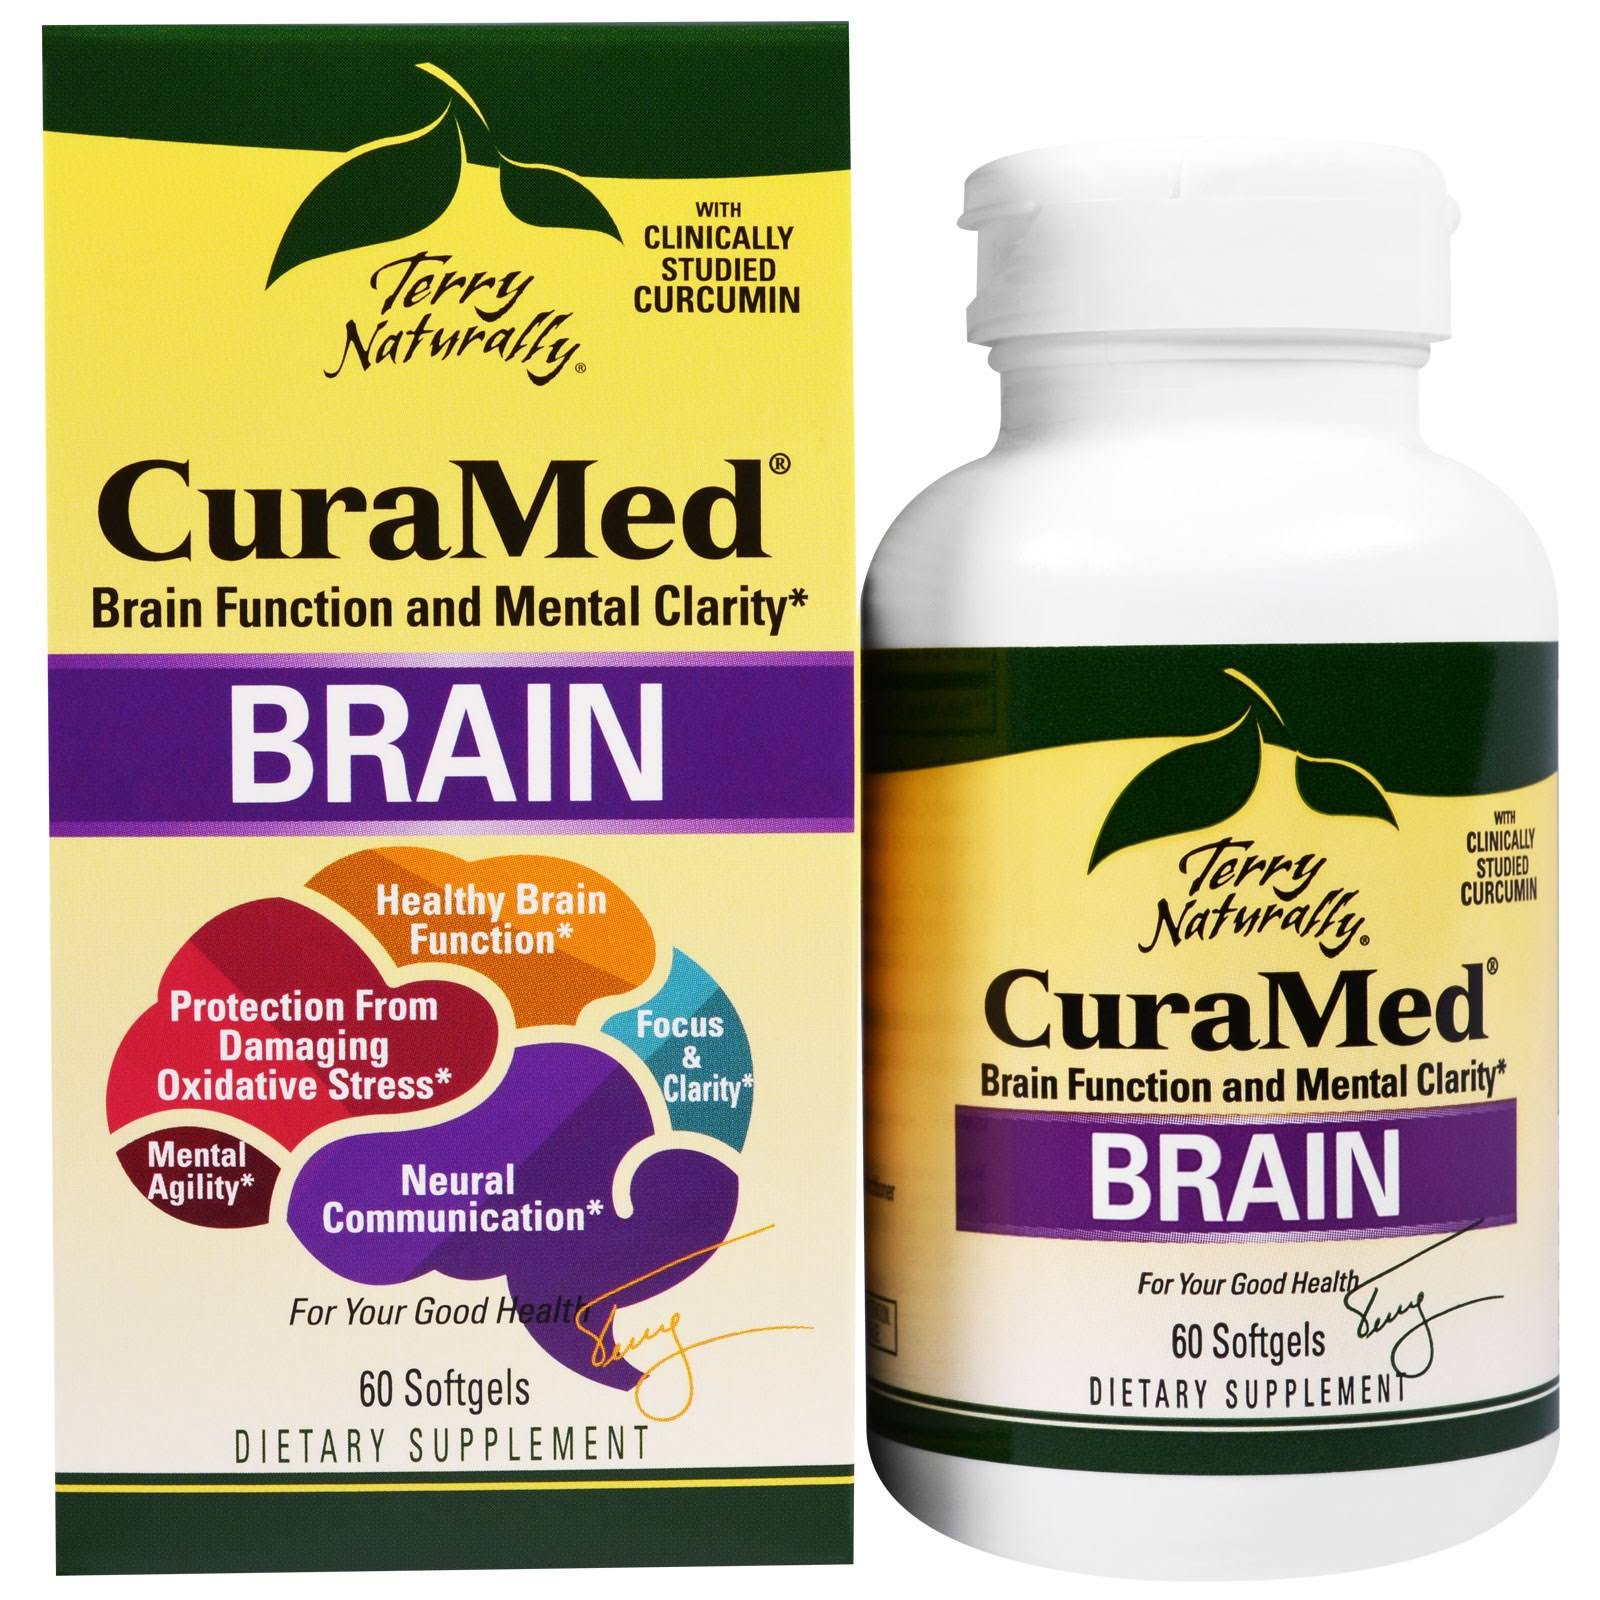 Terry Naturally Curamed Brain Supplement - 60 Softgel